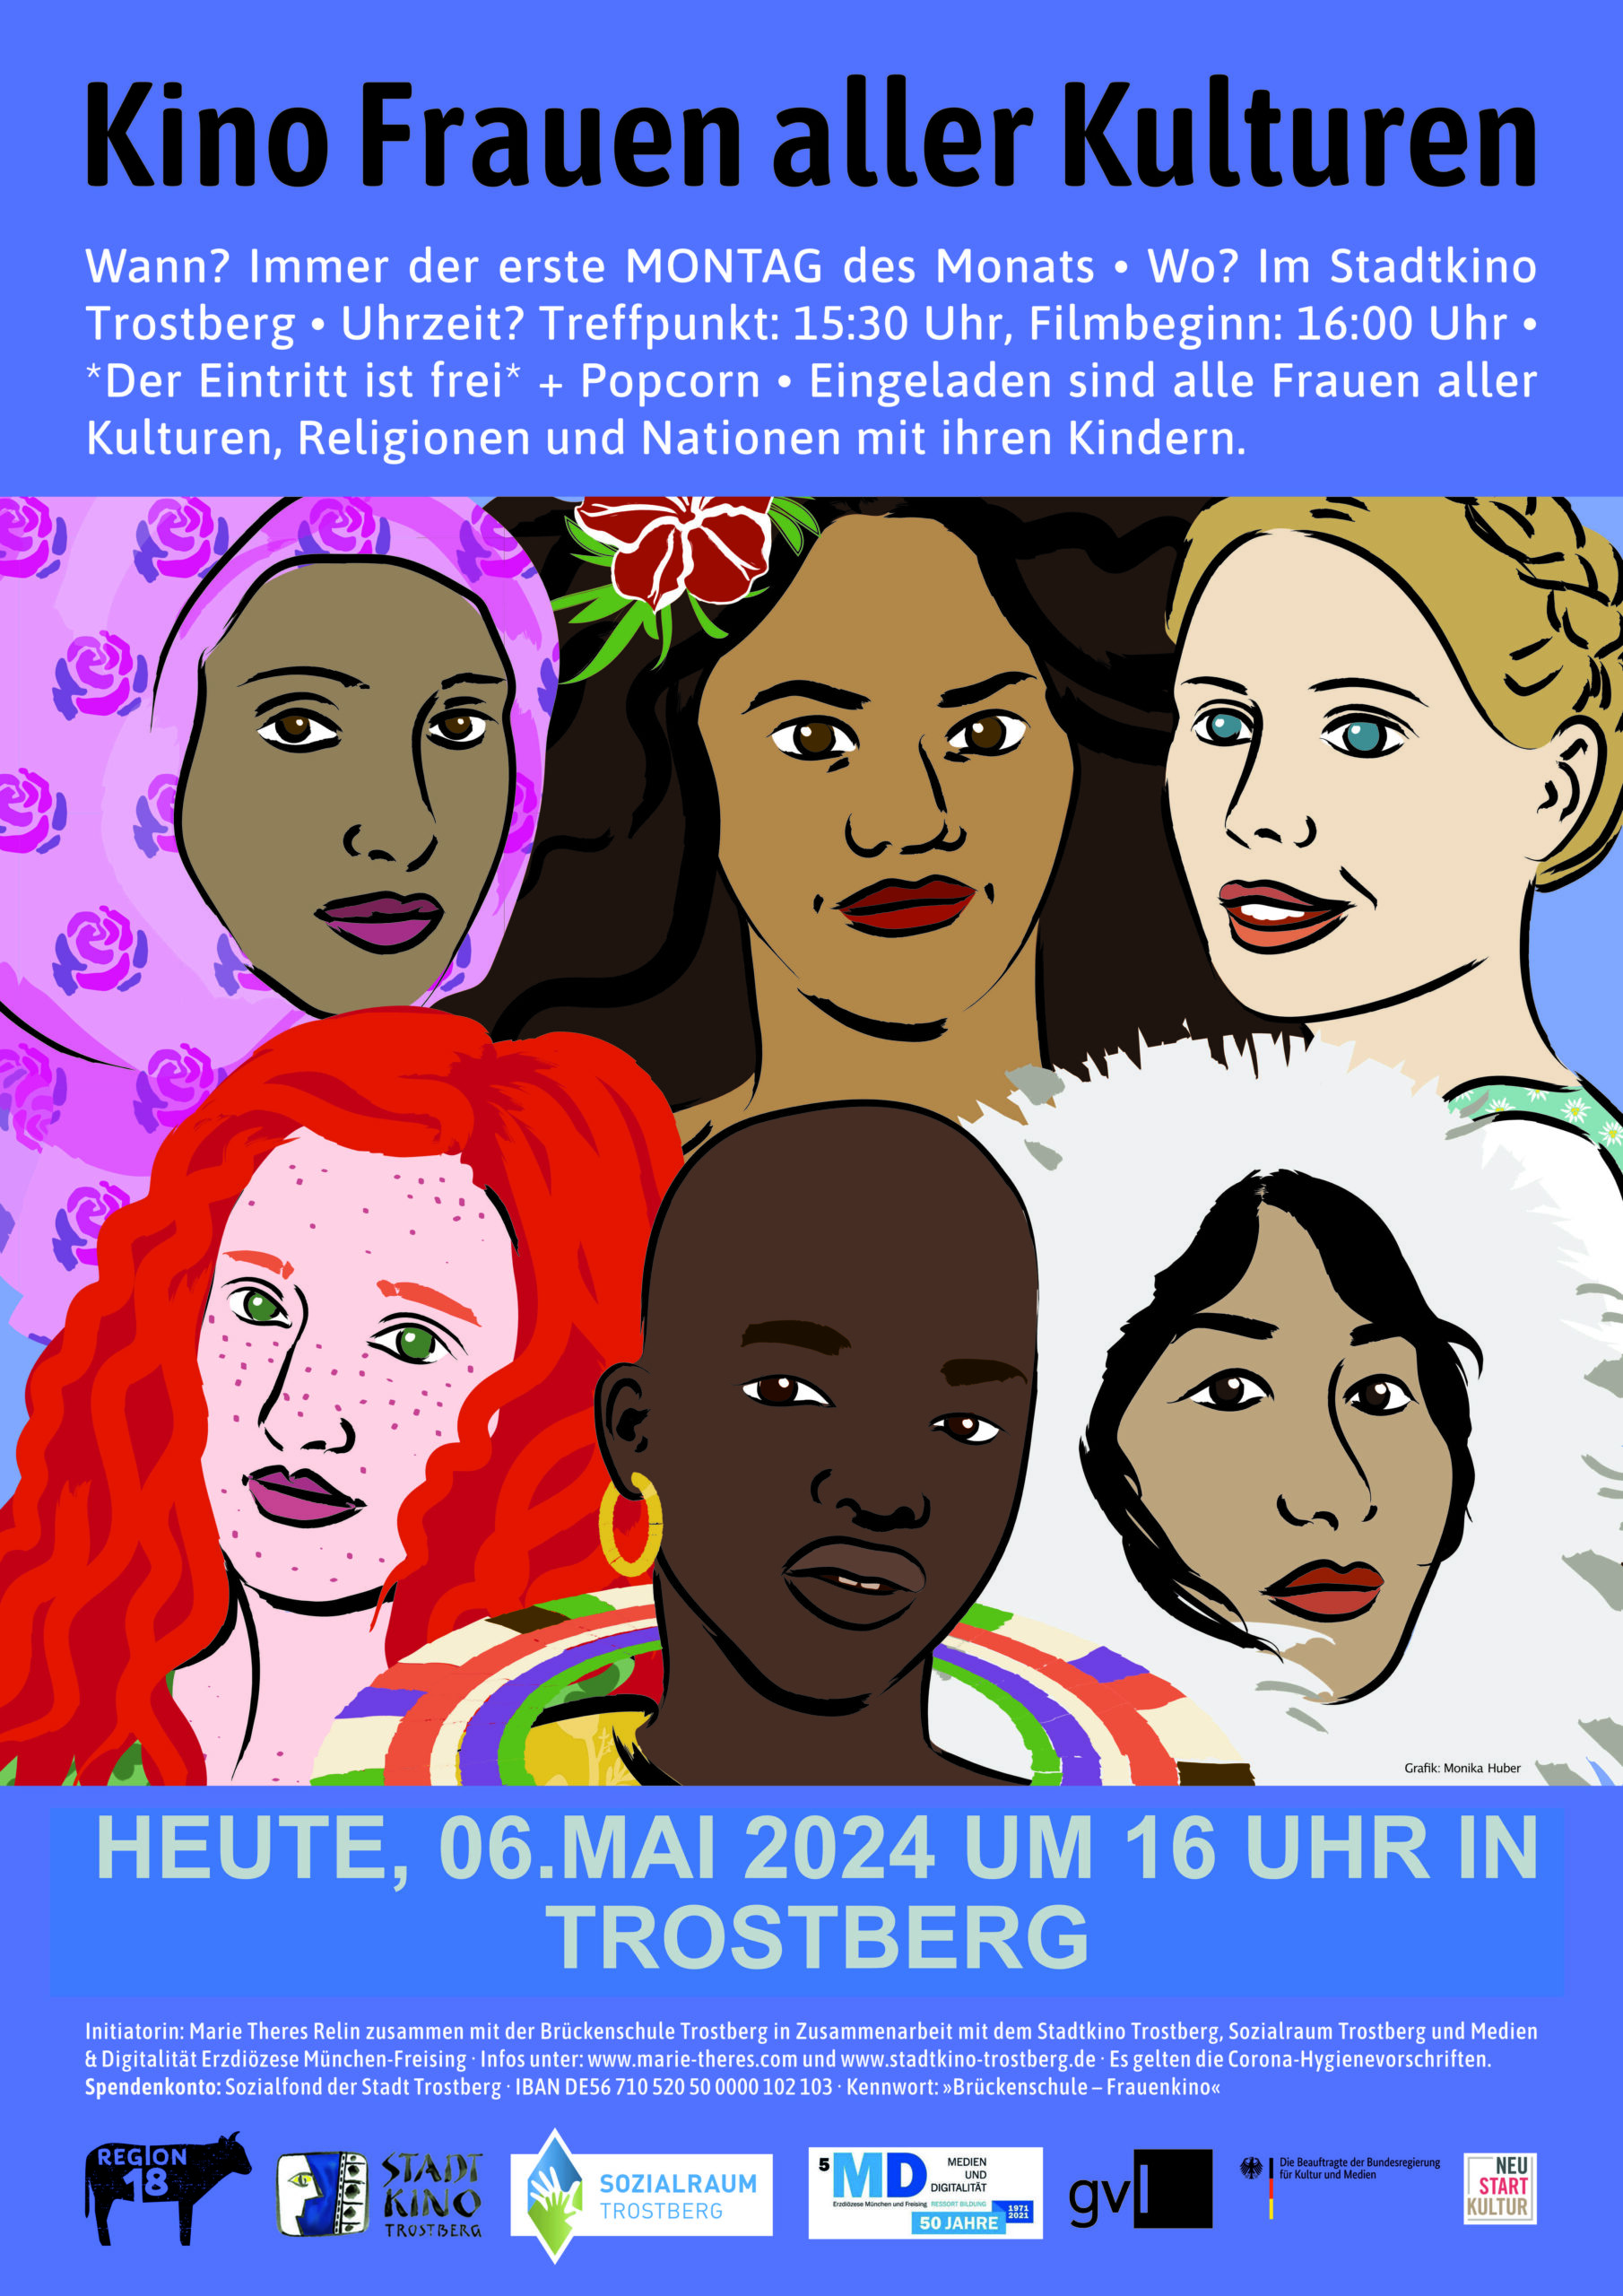 Du betrachtest gerade Kino Frauen aller Kulturen Trostberg 06. Mai 2024